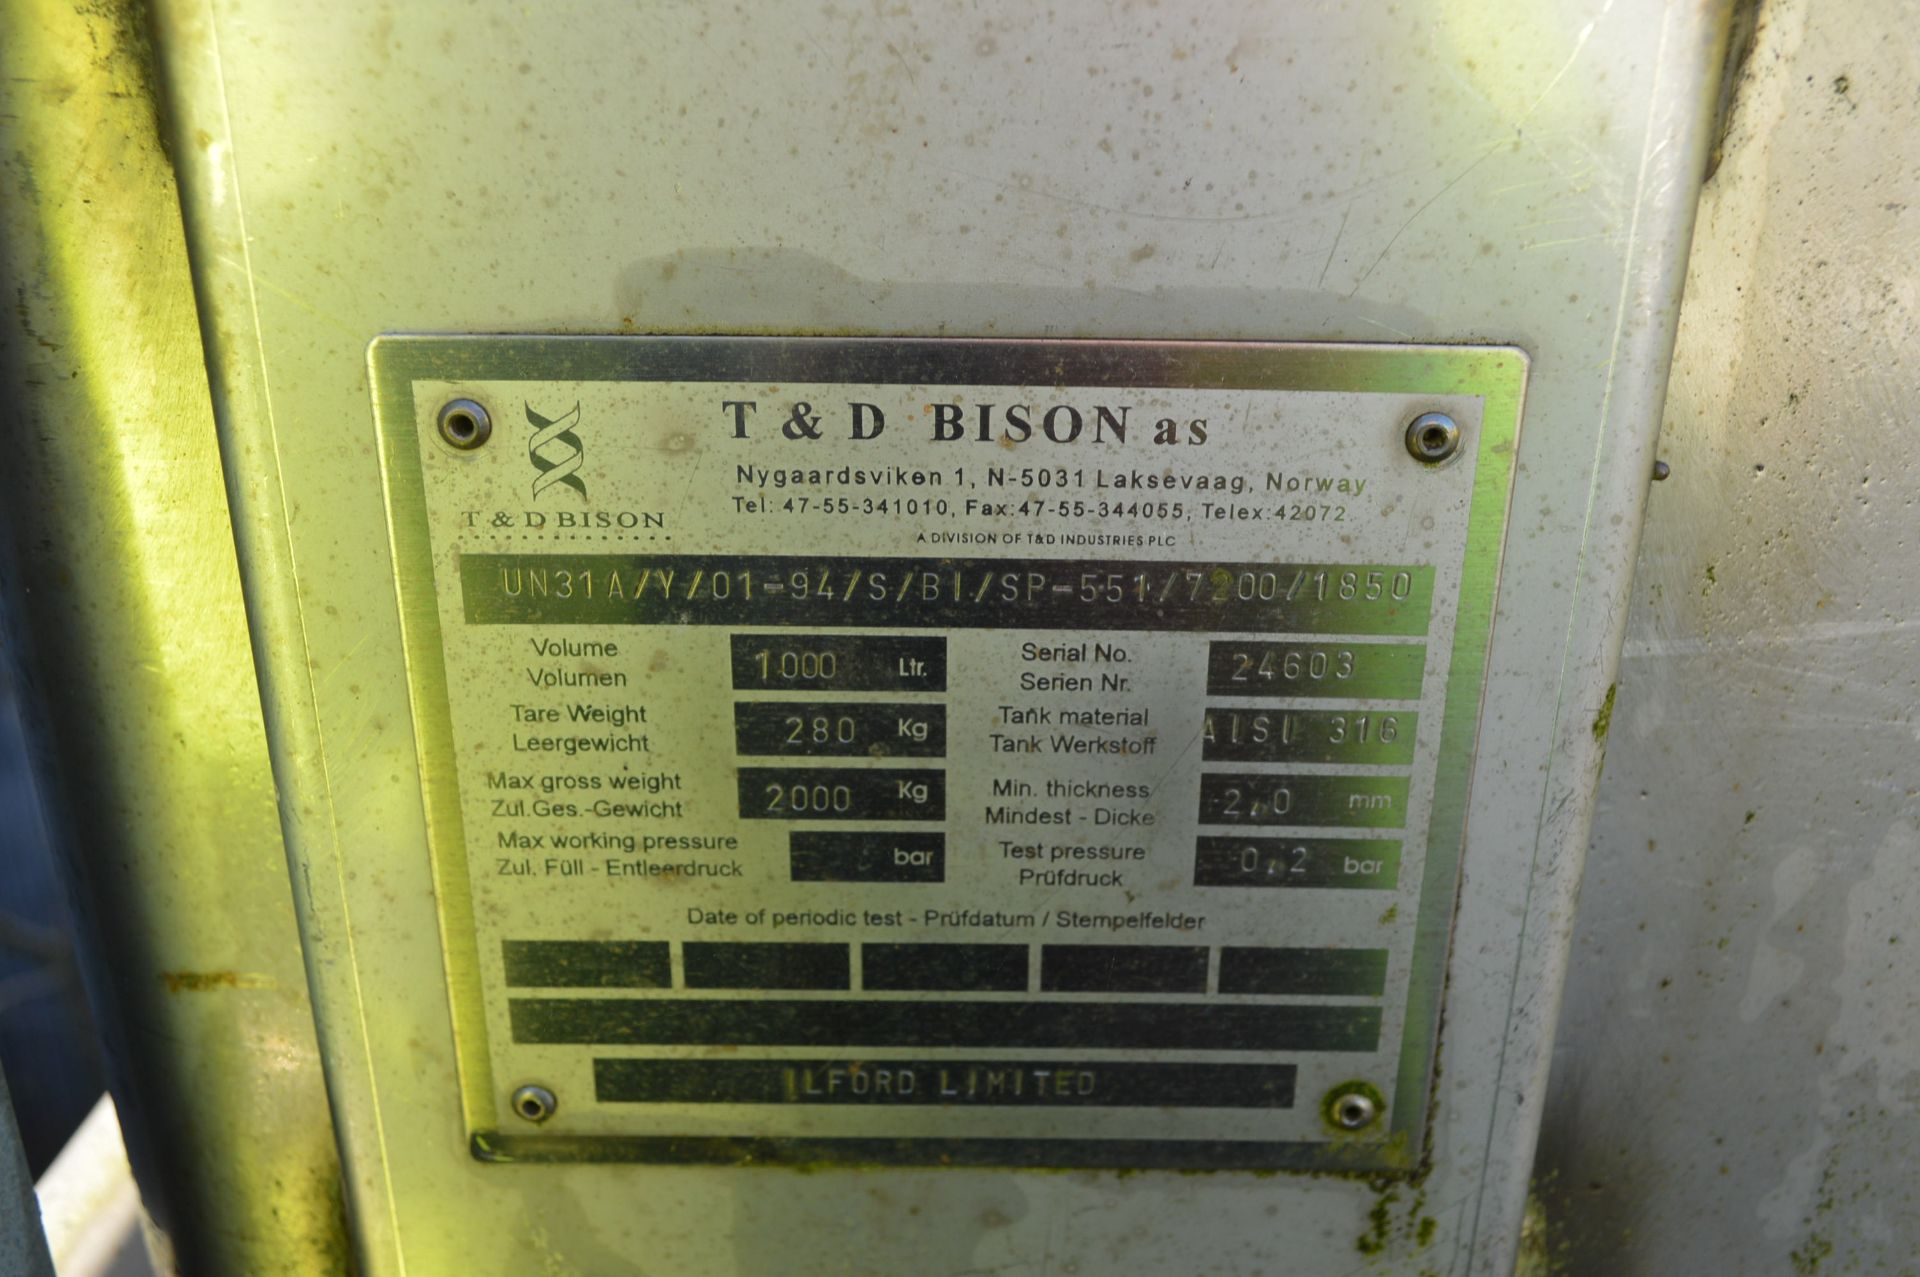 T & D Bison 1000 litre Stainless Steel Liquids Bul - Image 2 of 3